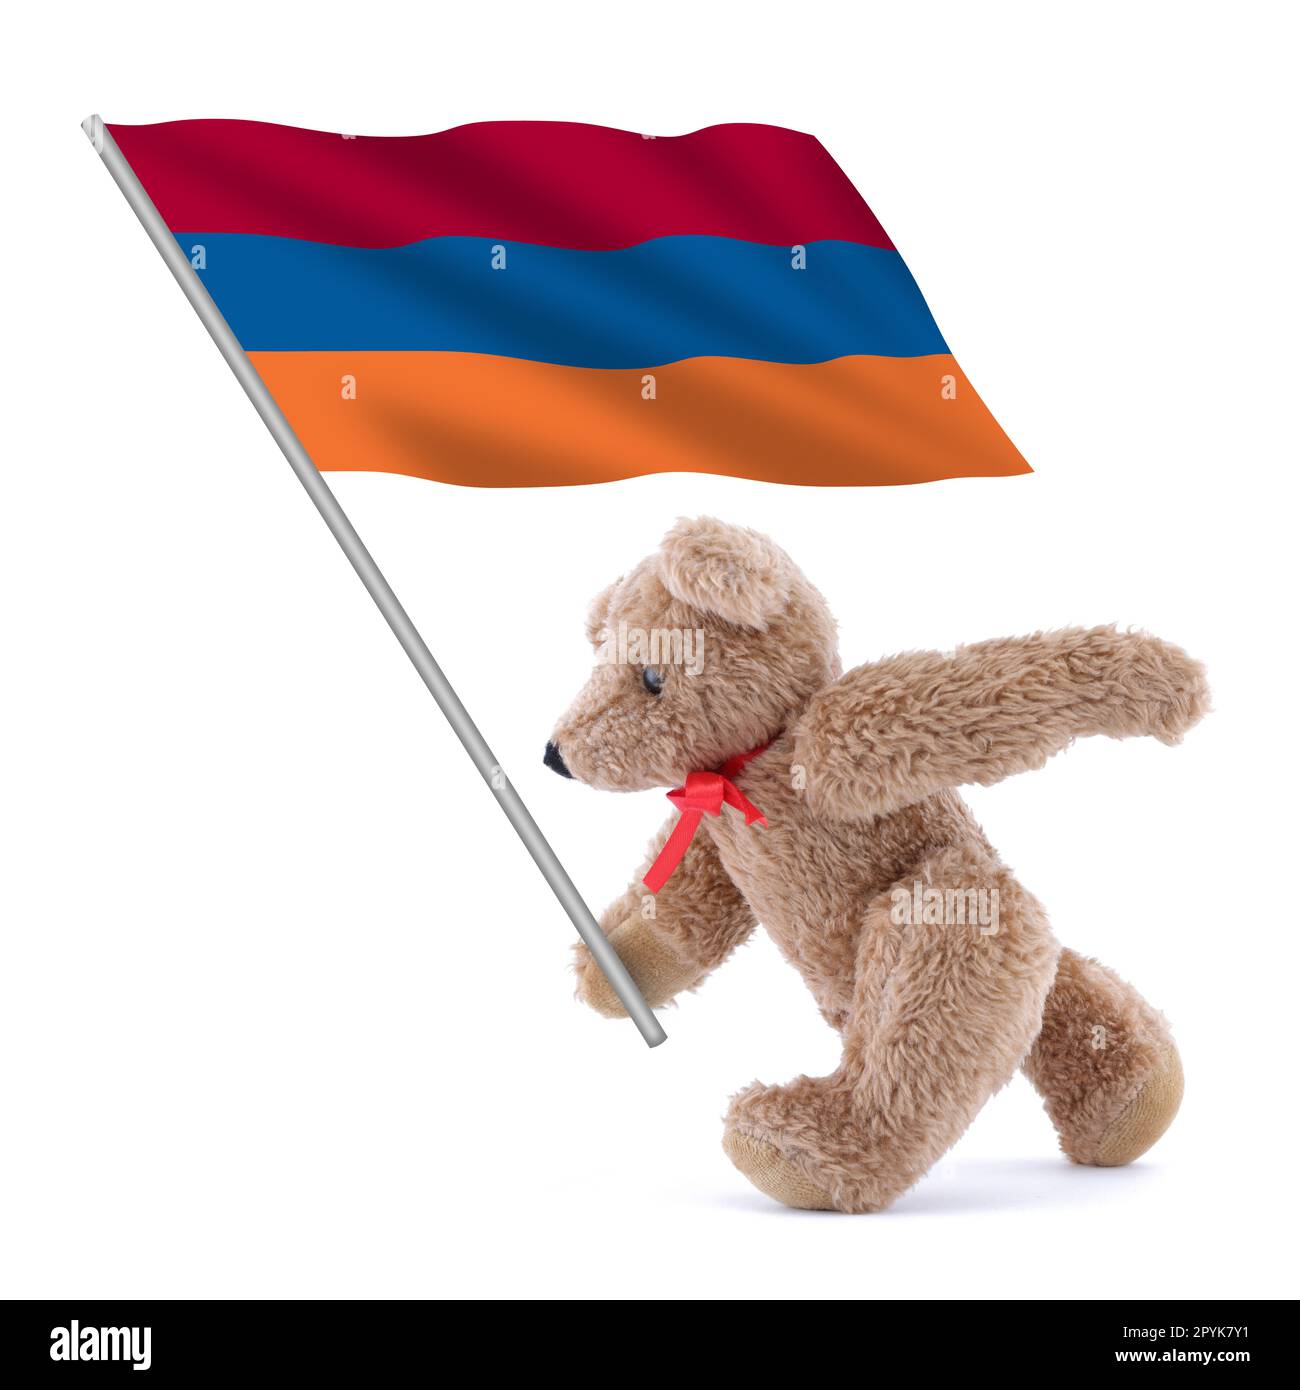 Armenia flag being carried by a cute teddy bear Stock Photo